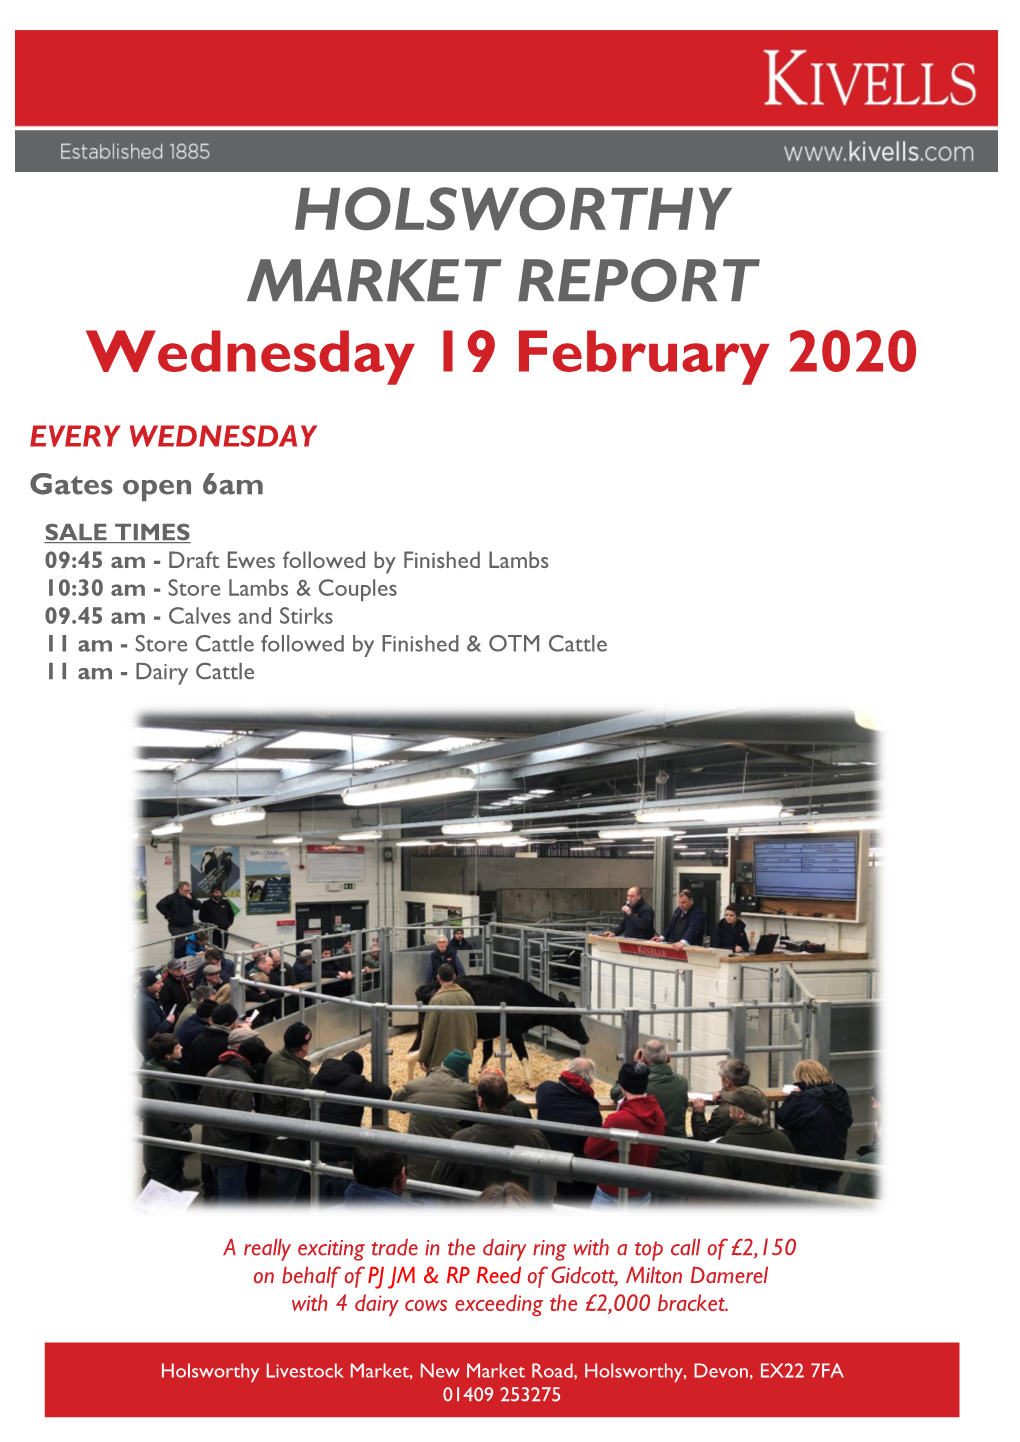 HOLSWORTHY MARKET REPORT Wednesday 19 February 2020